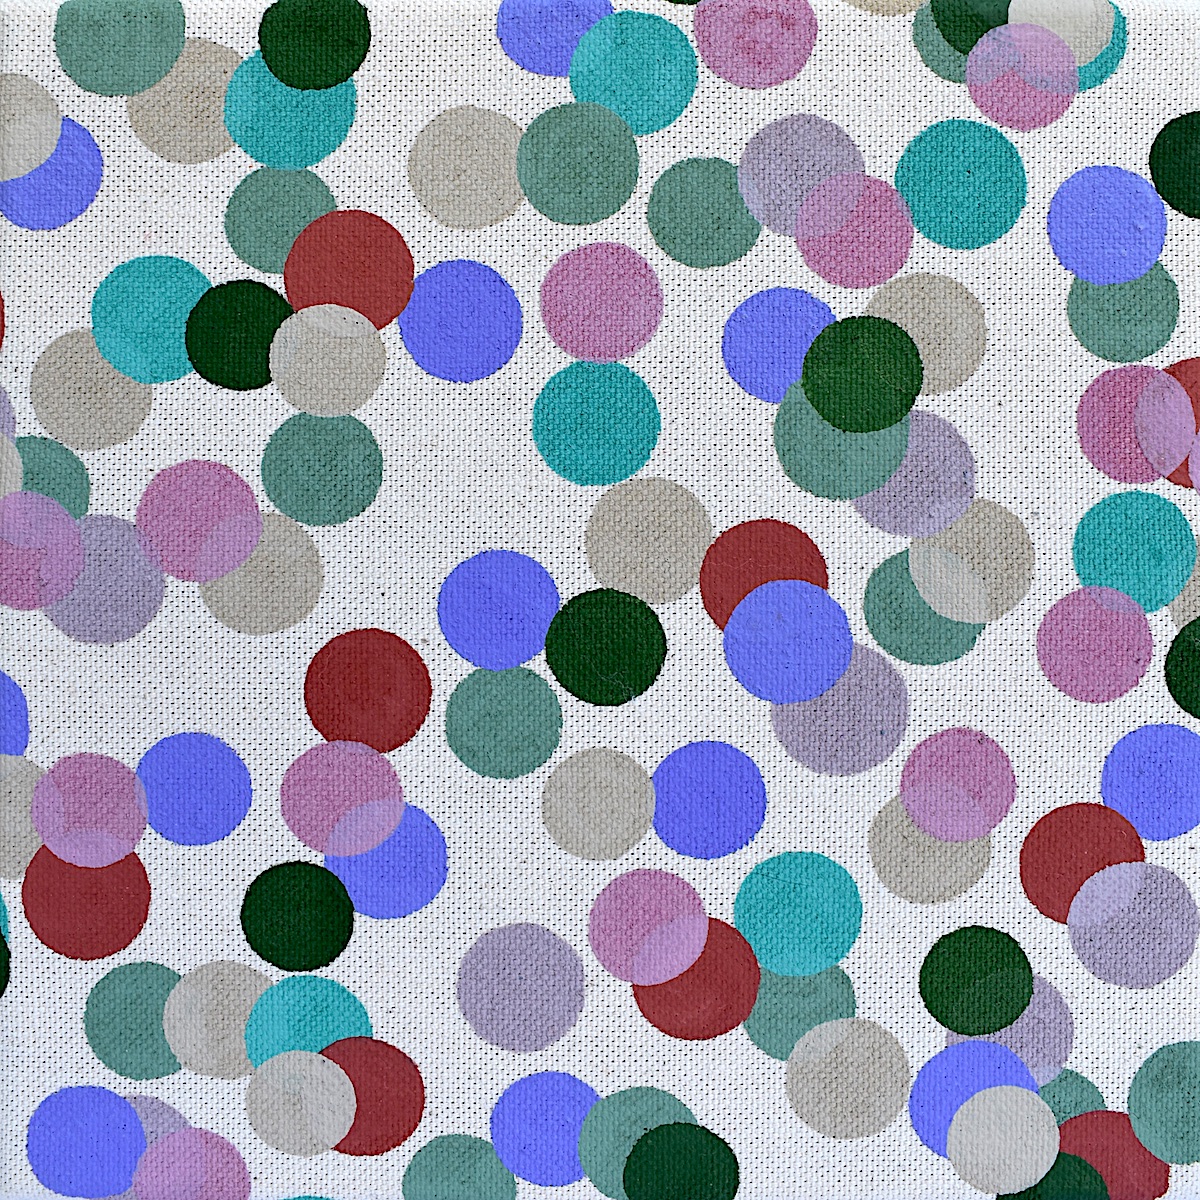 simone hamann bubbles_camouflage2 2021 19 x 19cm acrylic on cotton